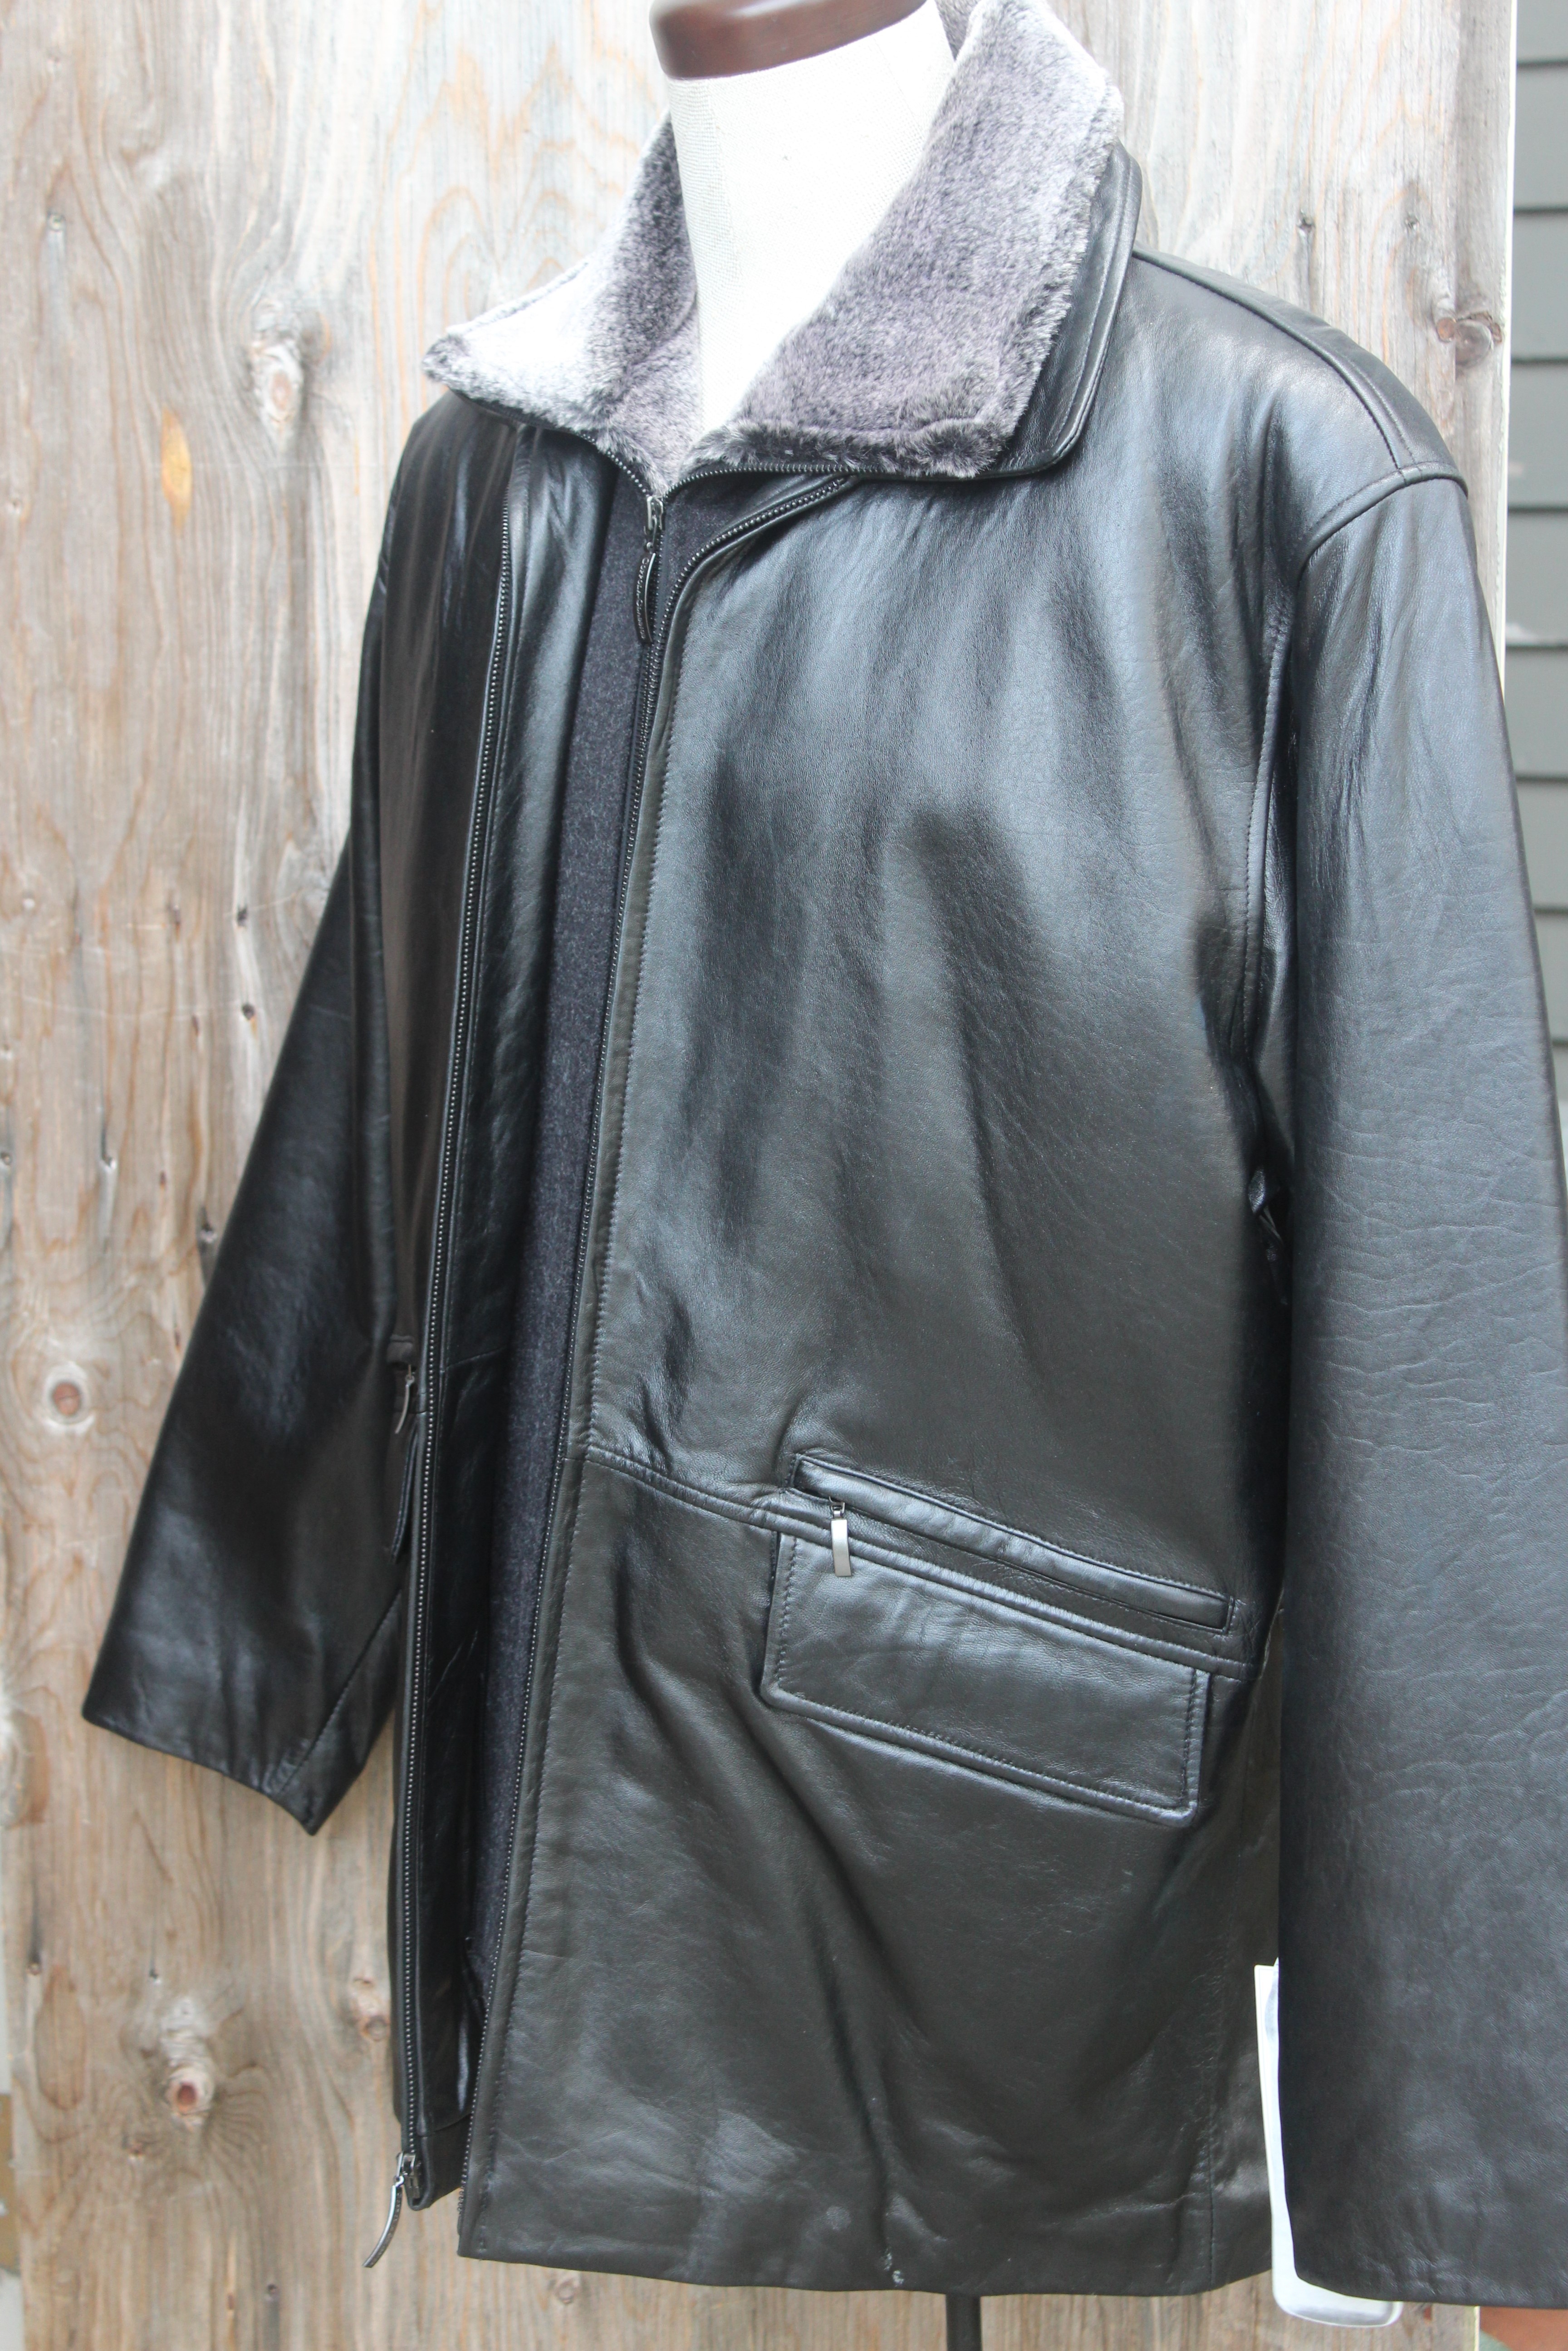 Black Leather- $375.00
Coppola Classics Leatherwear
Style #: 7644RM